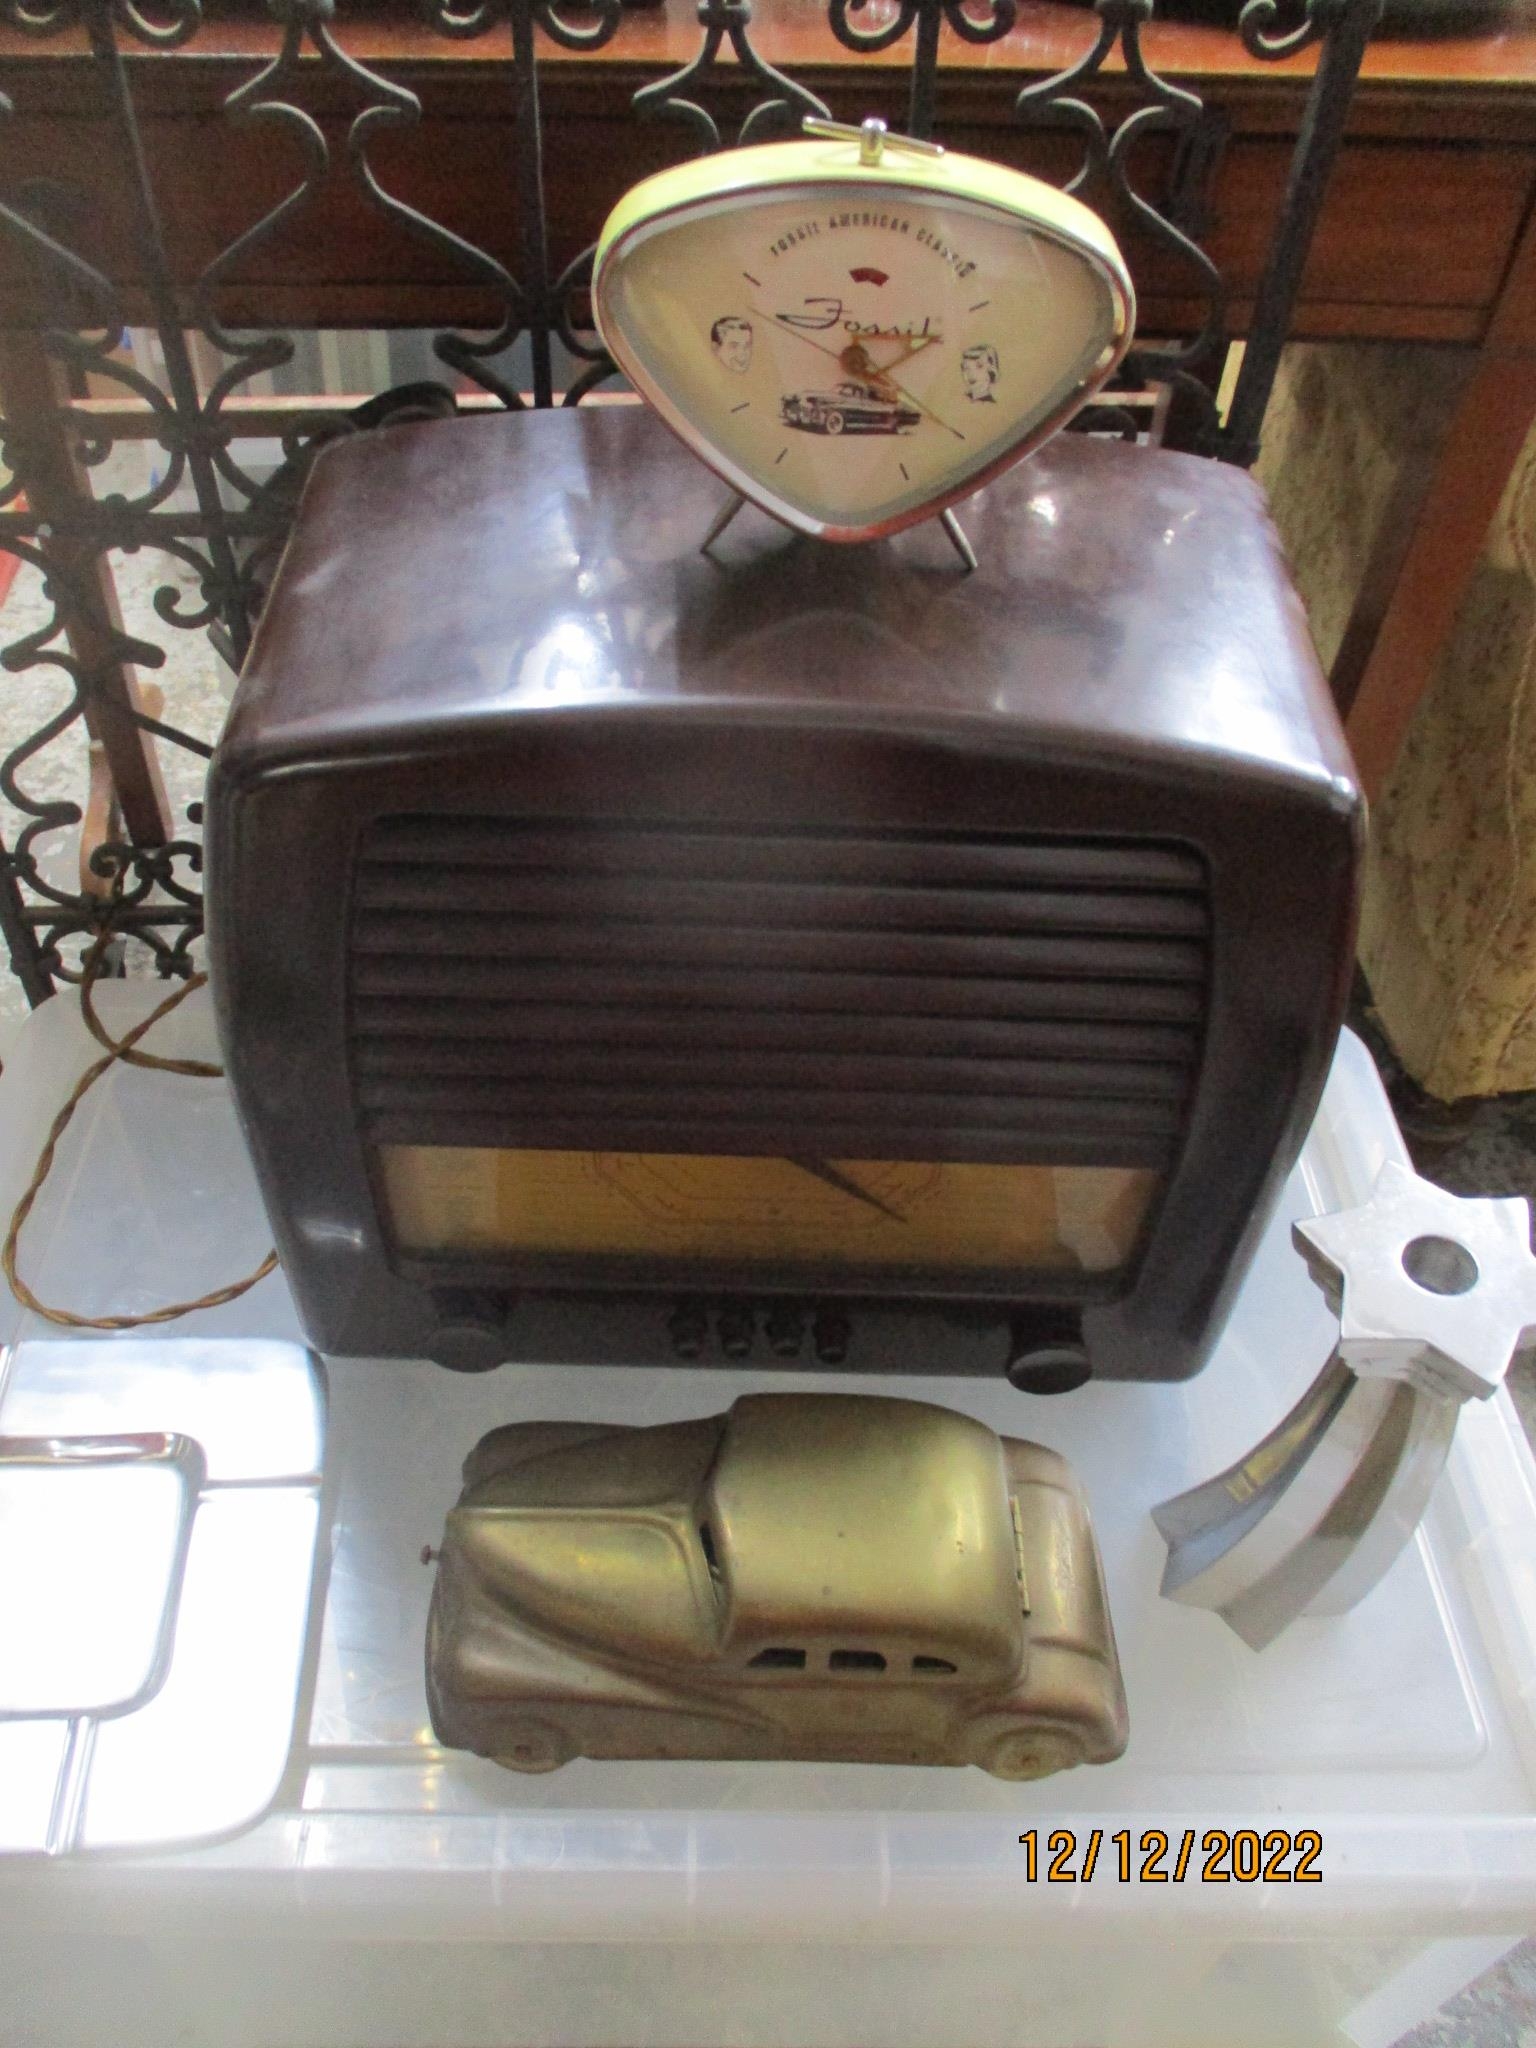 A General Electric Company (GEC) Bakelite cased radio, a Fossil American classic alarm clock,